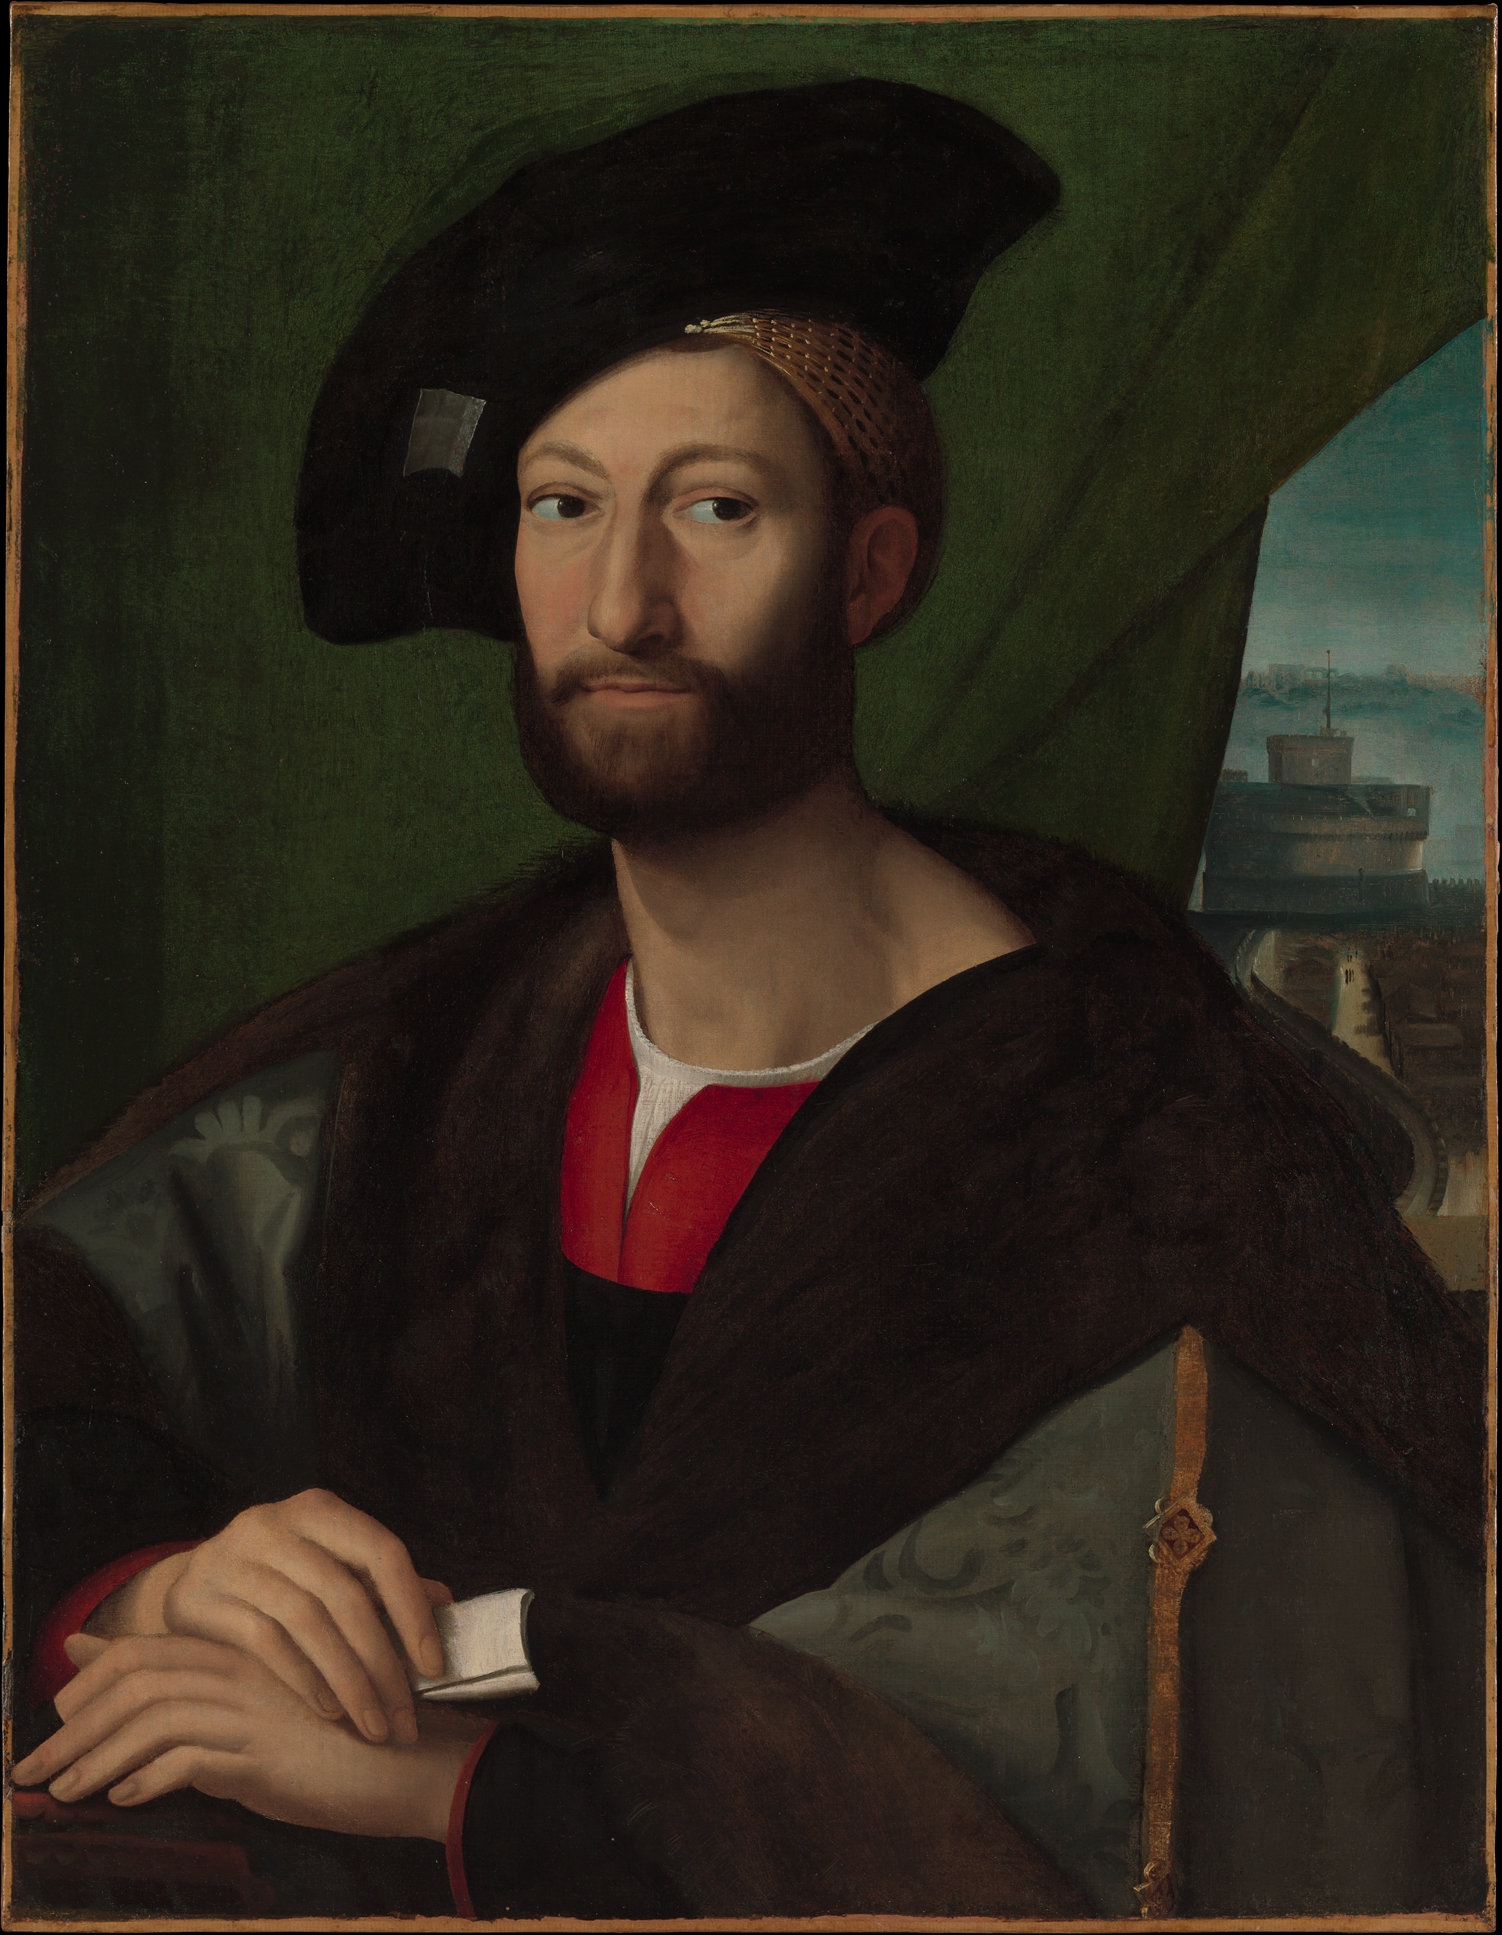 Workshop (?) of Raphael | Giuliano de' Medici (1479–1516), Duke of Nemours  | The Metropolitan Museum of Art